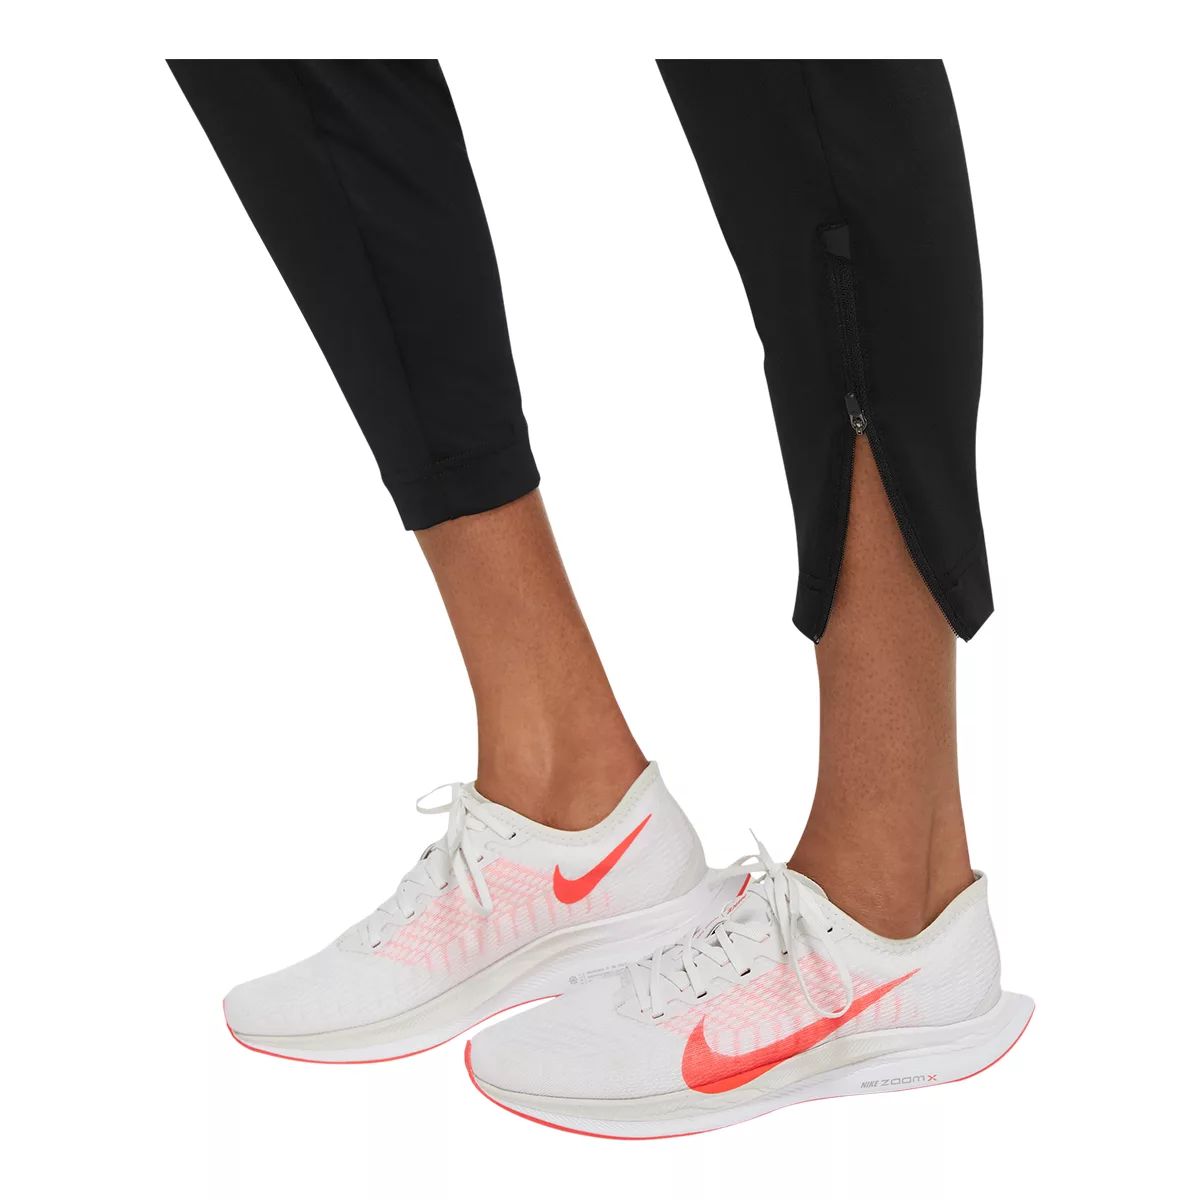 Nike Women's Dri-FIT Element Pant